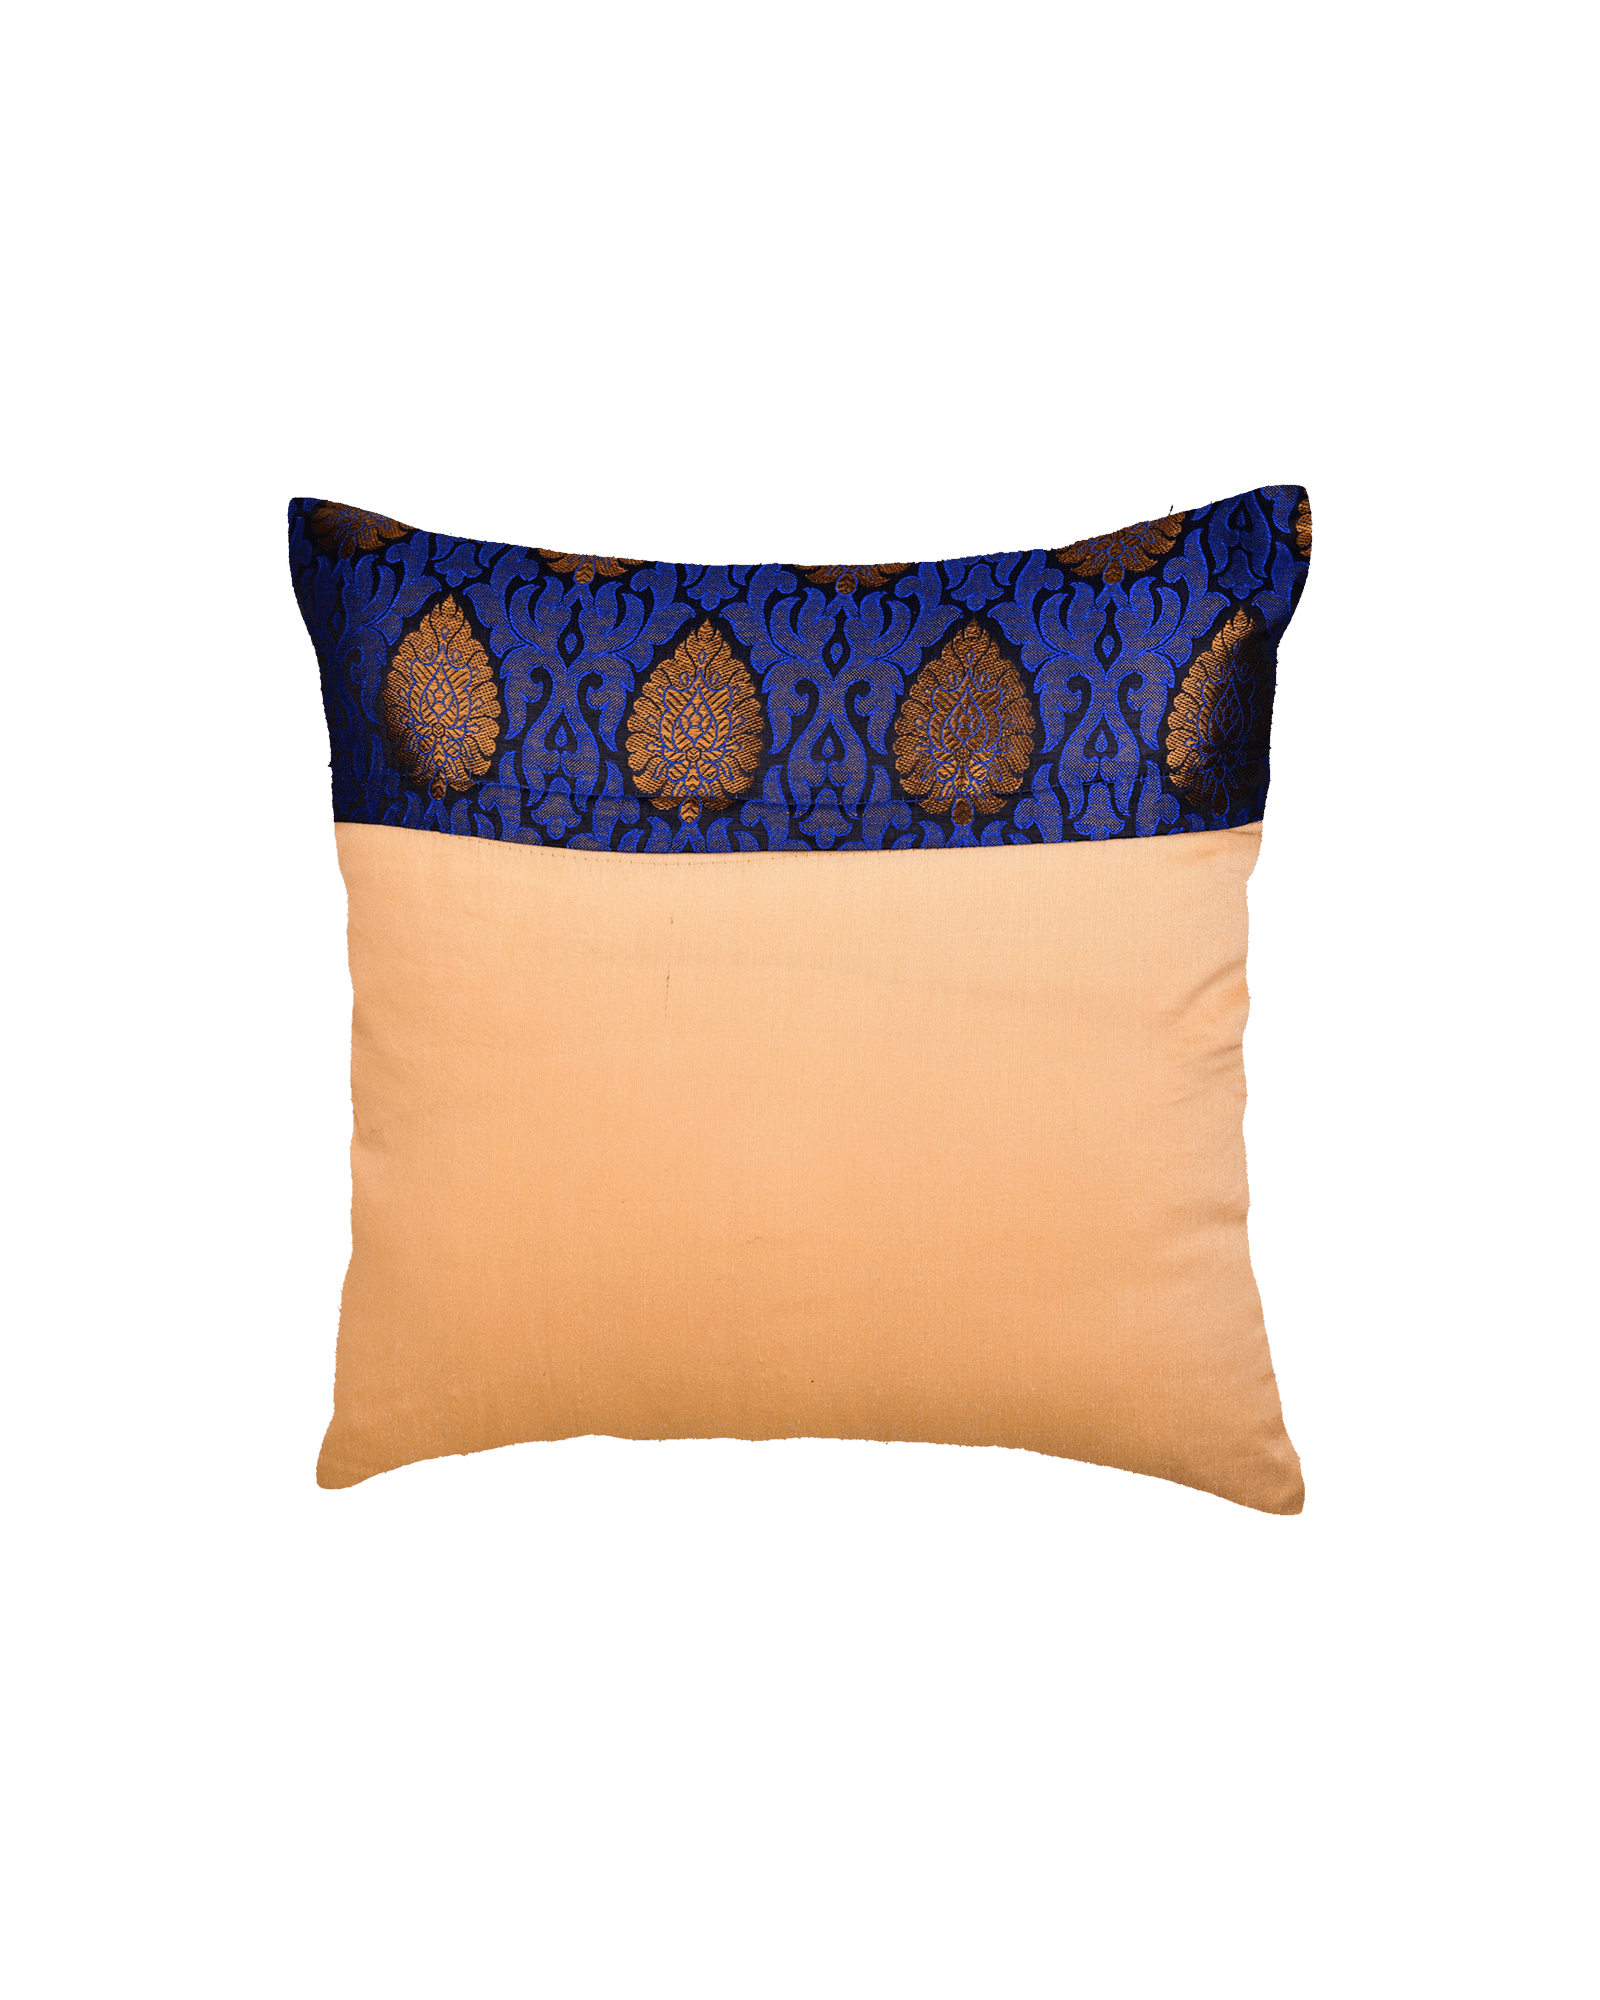 Blue Banarasi Brocade Poly Silk Cushion Cover 16" - By HolyWeaves, Benares